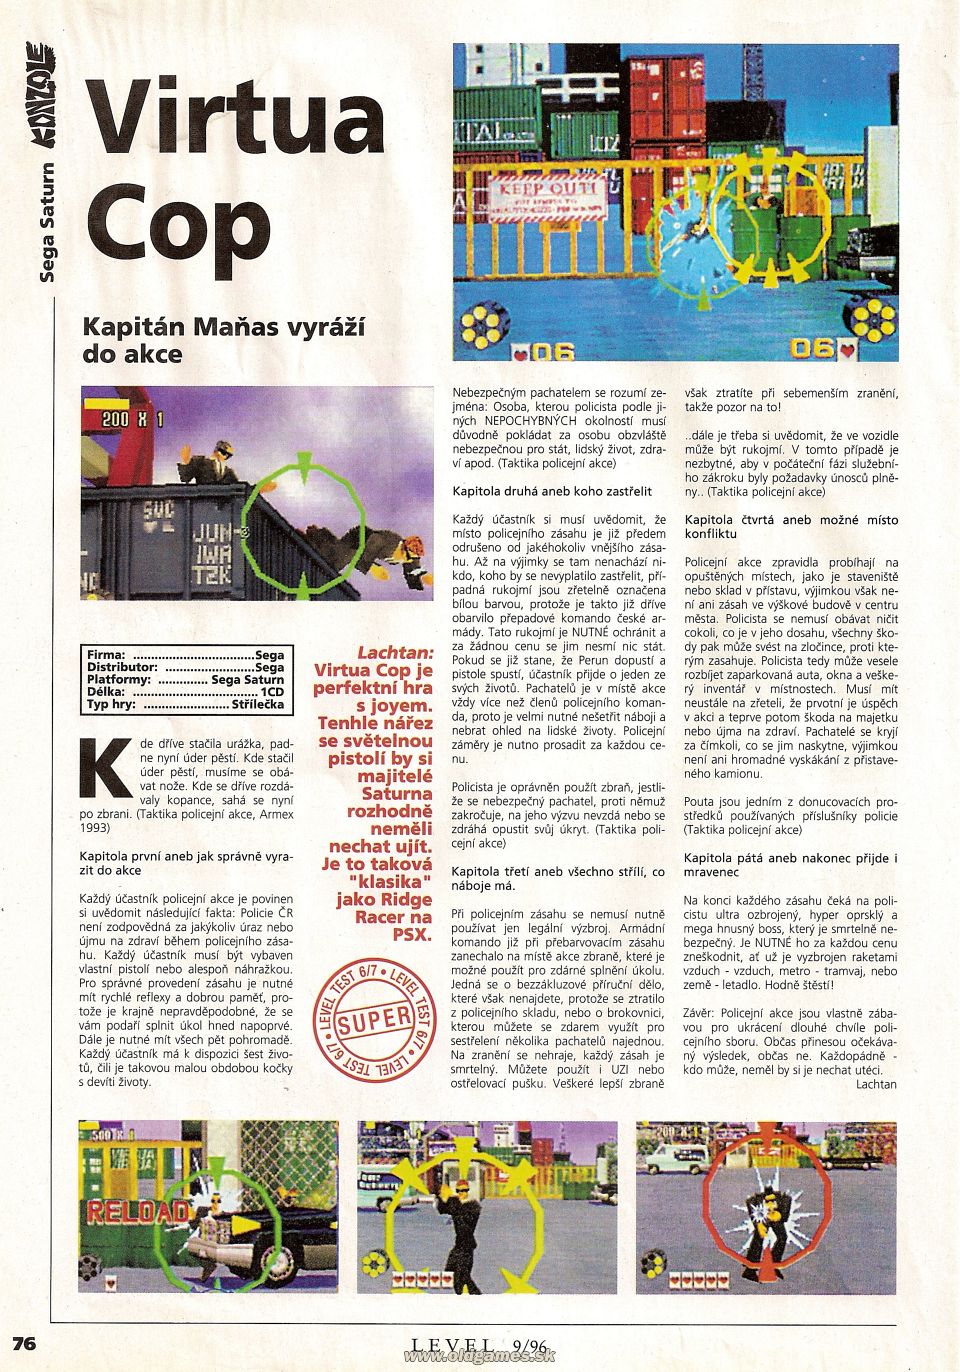 Virtua Cop (Sega Saturn)